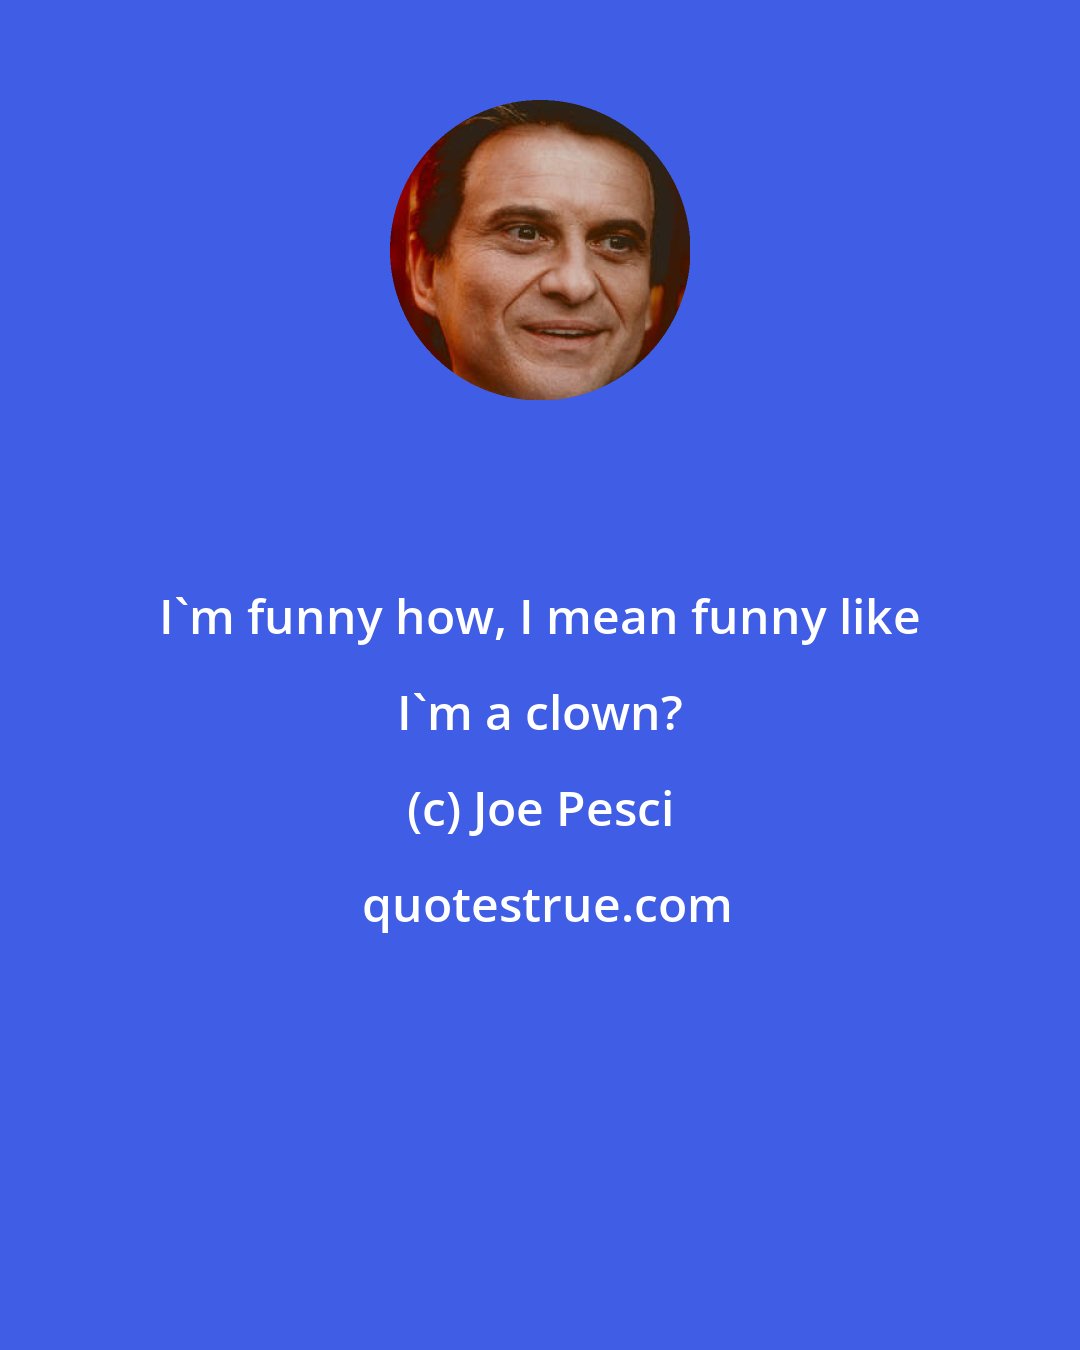 Joe Pesci: I'm funny how, I mean funny like I'm a clown?